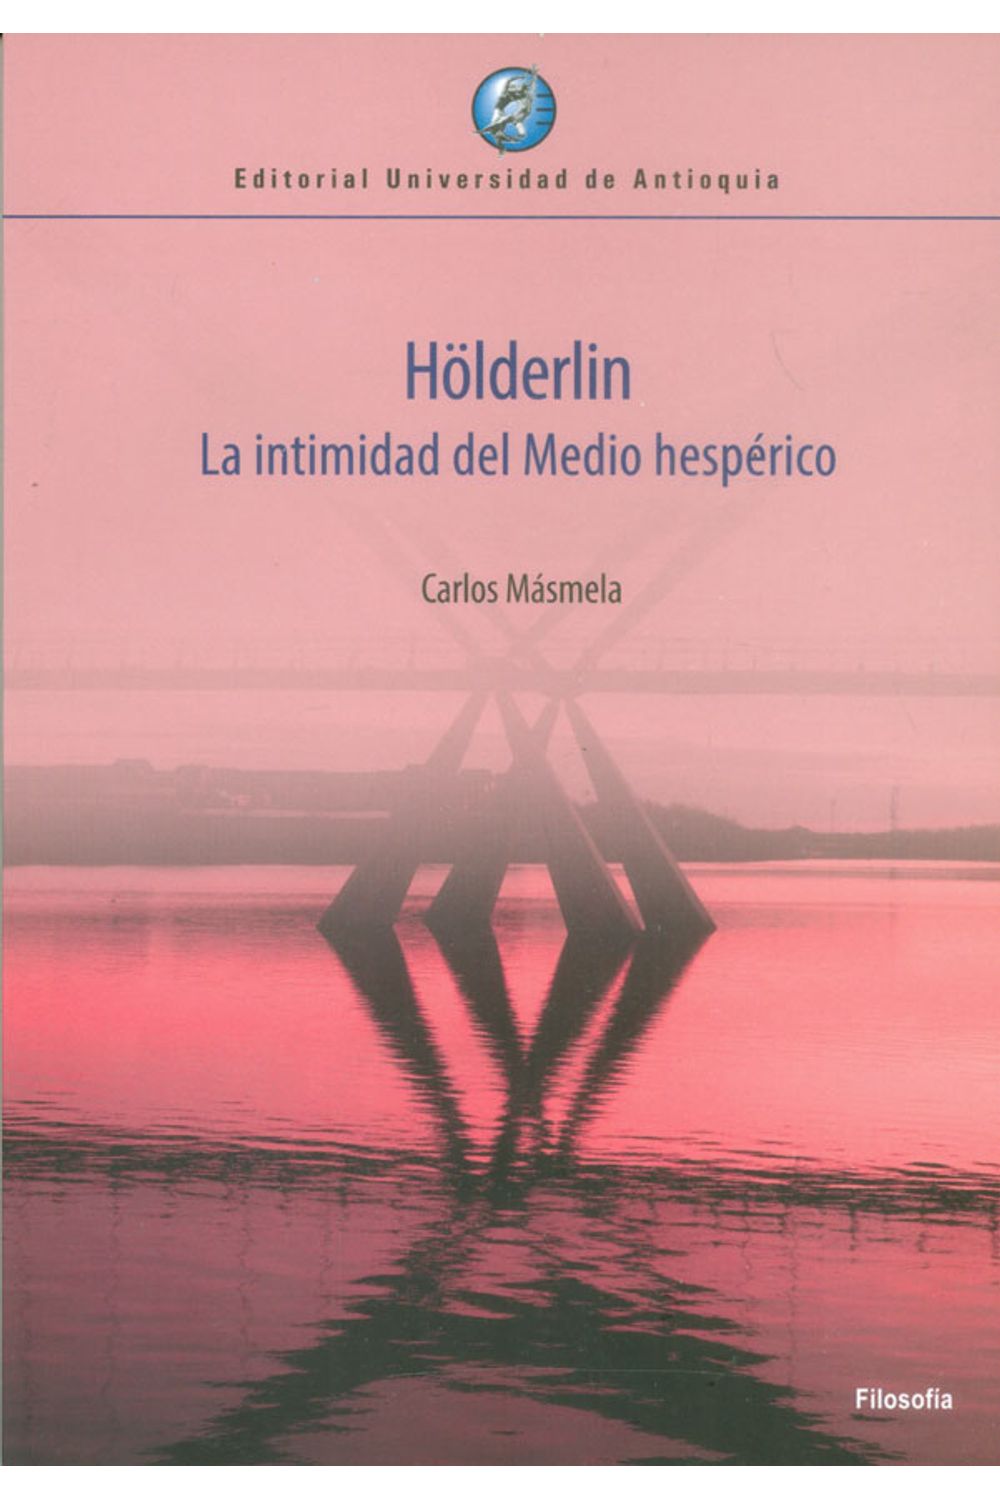 holderlin-9789587148022-udea